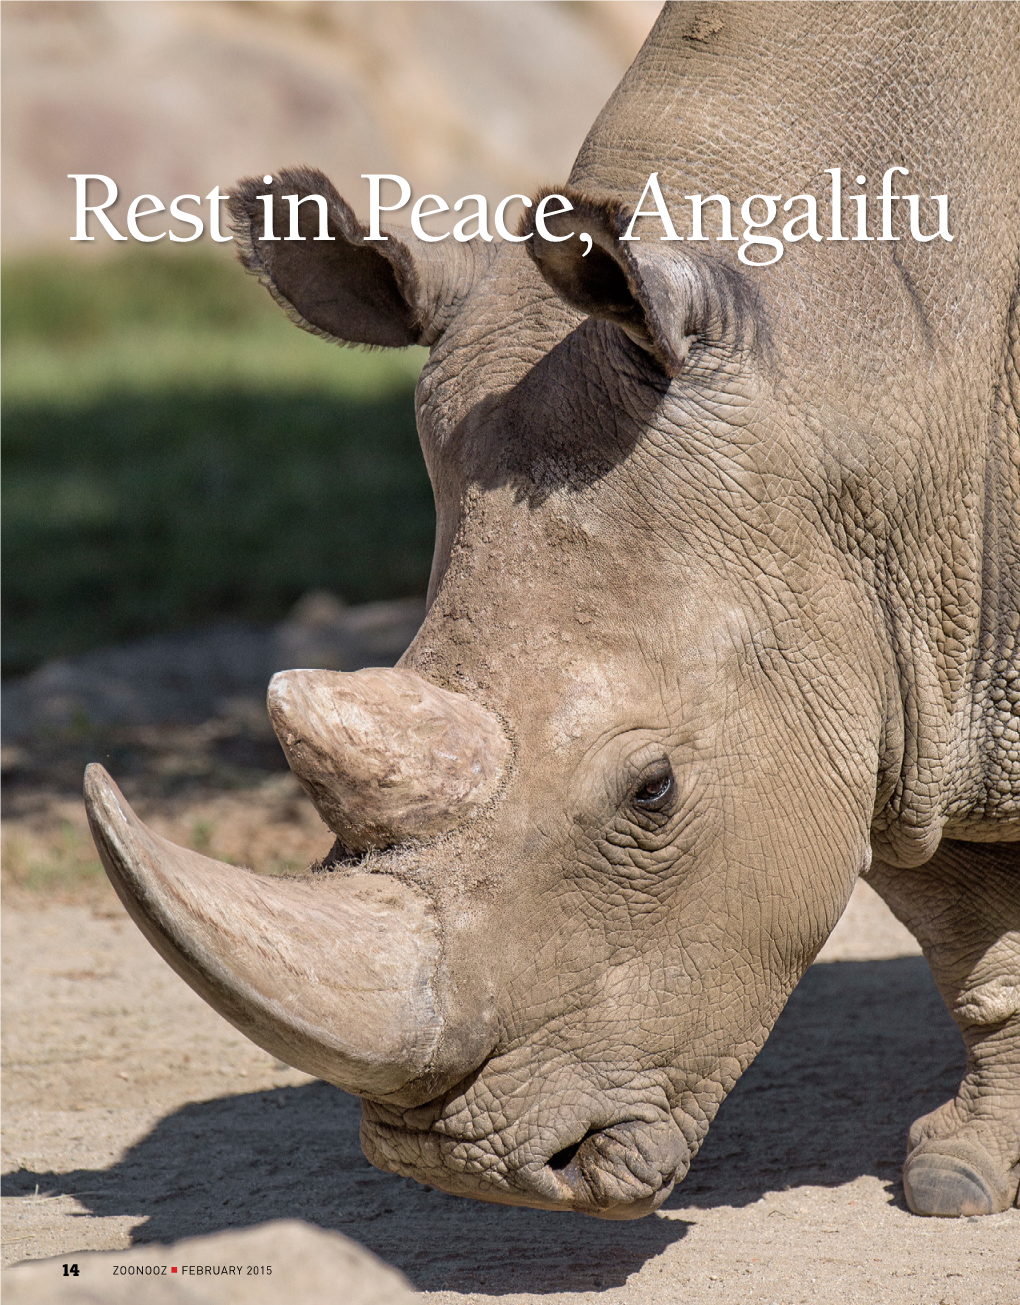 Rest in Peace, Angalifu